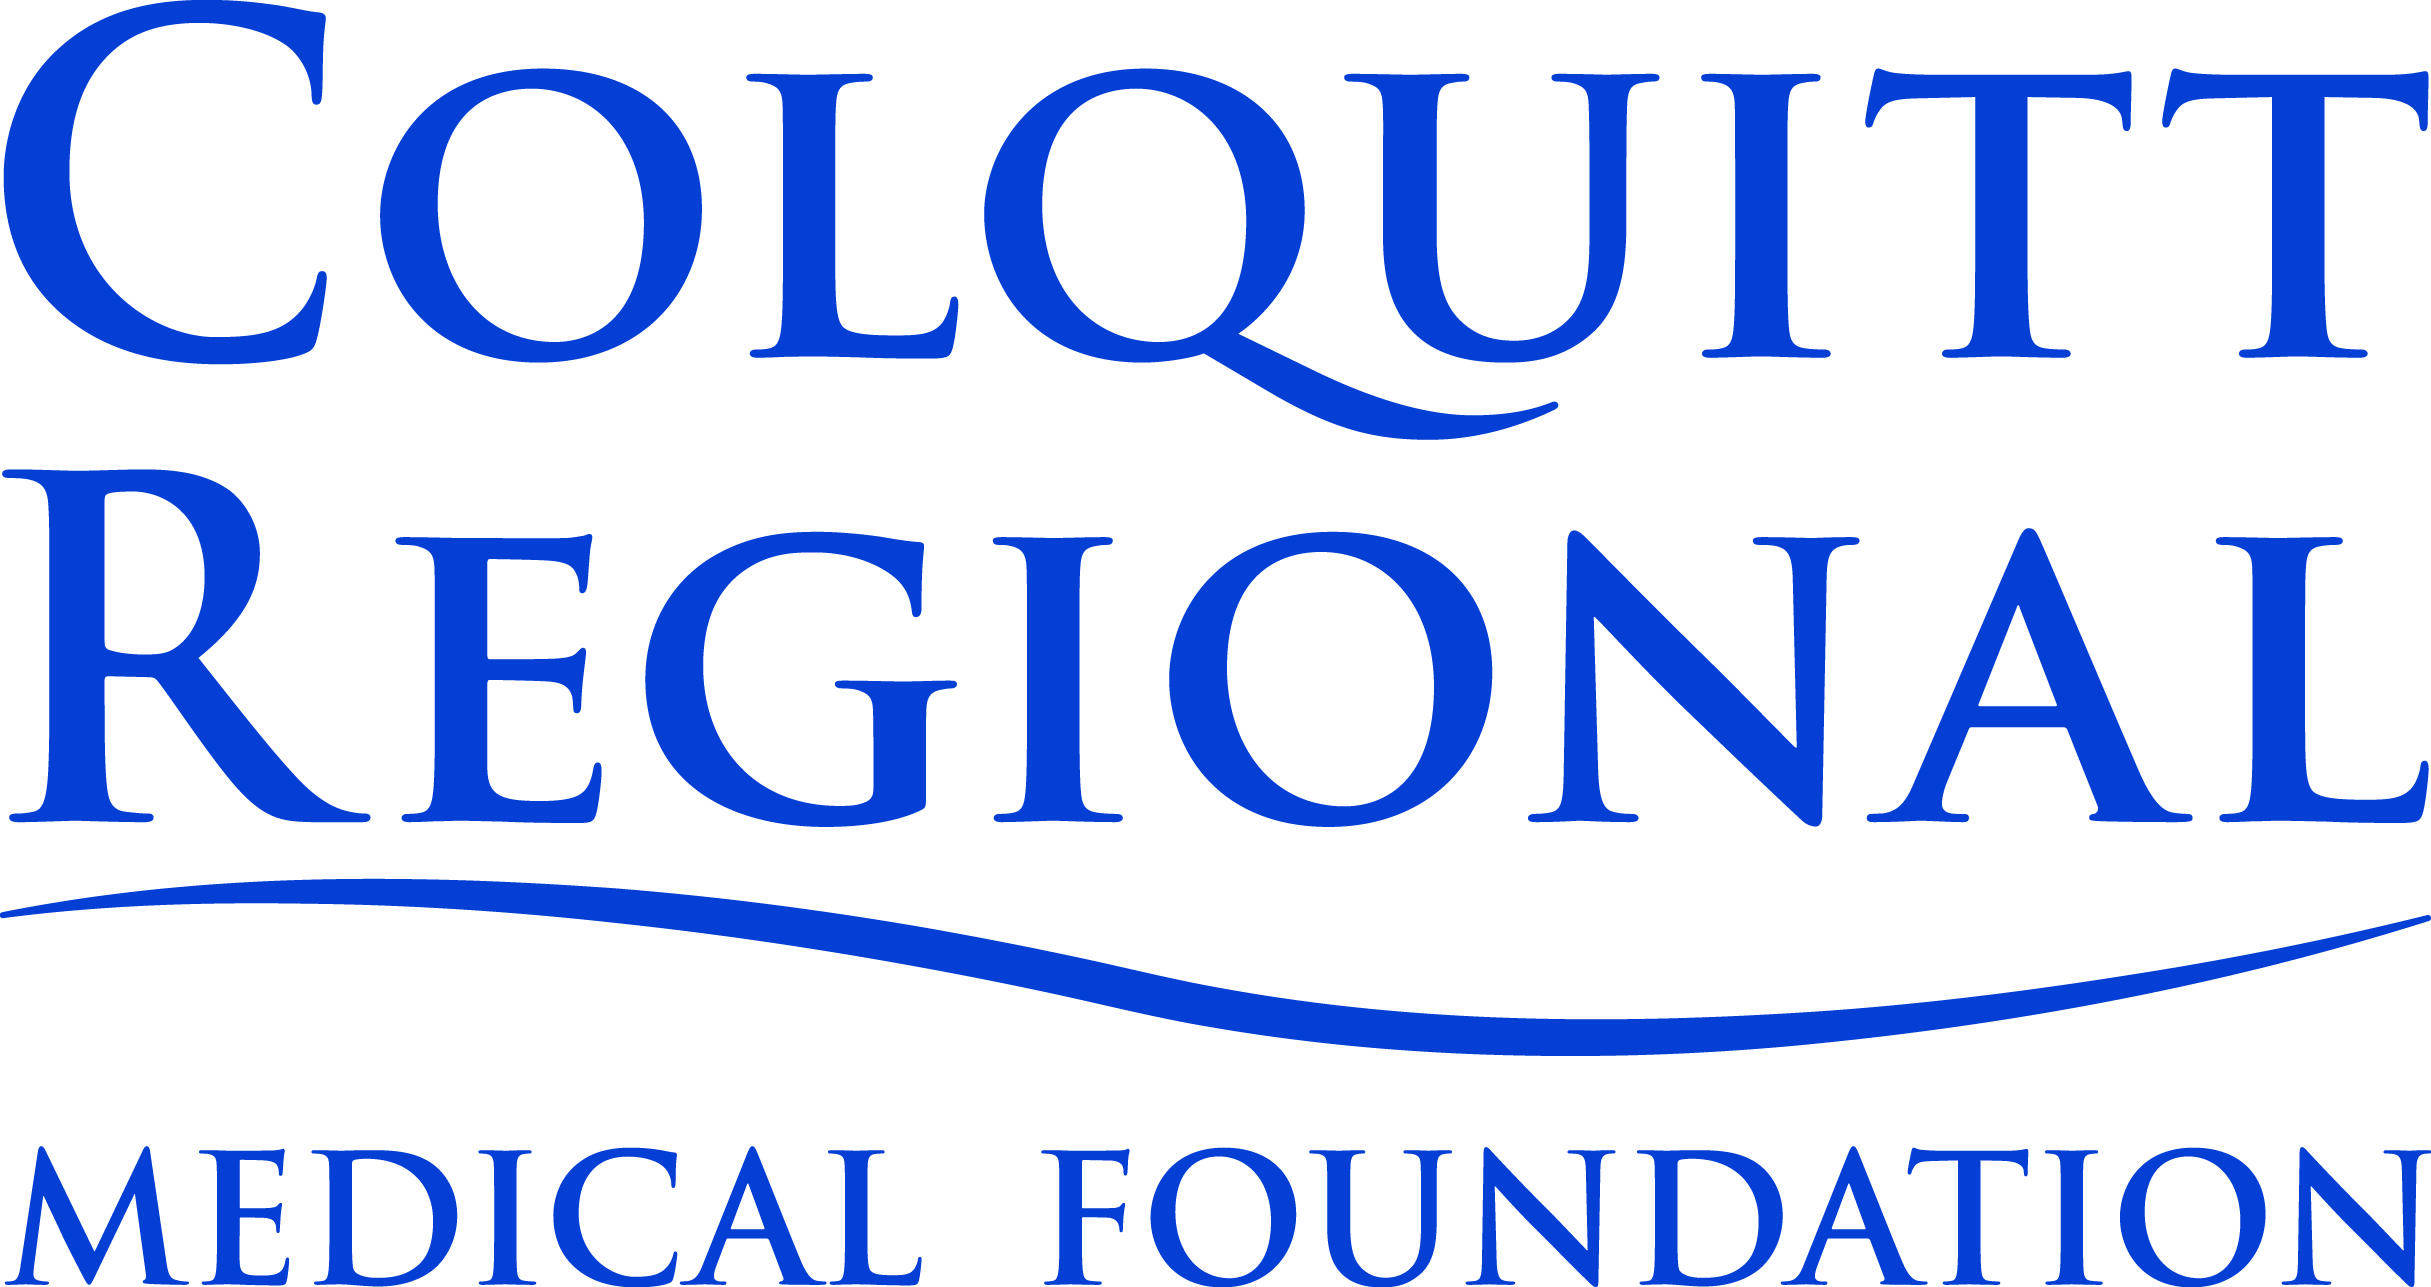 Colquitt Regional Medical Foundation logo